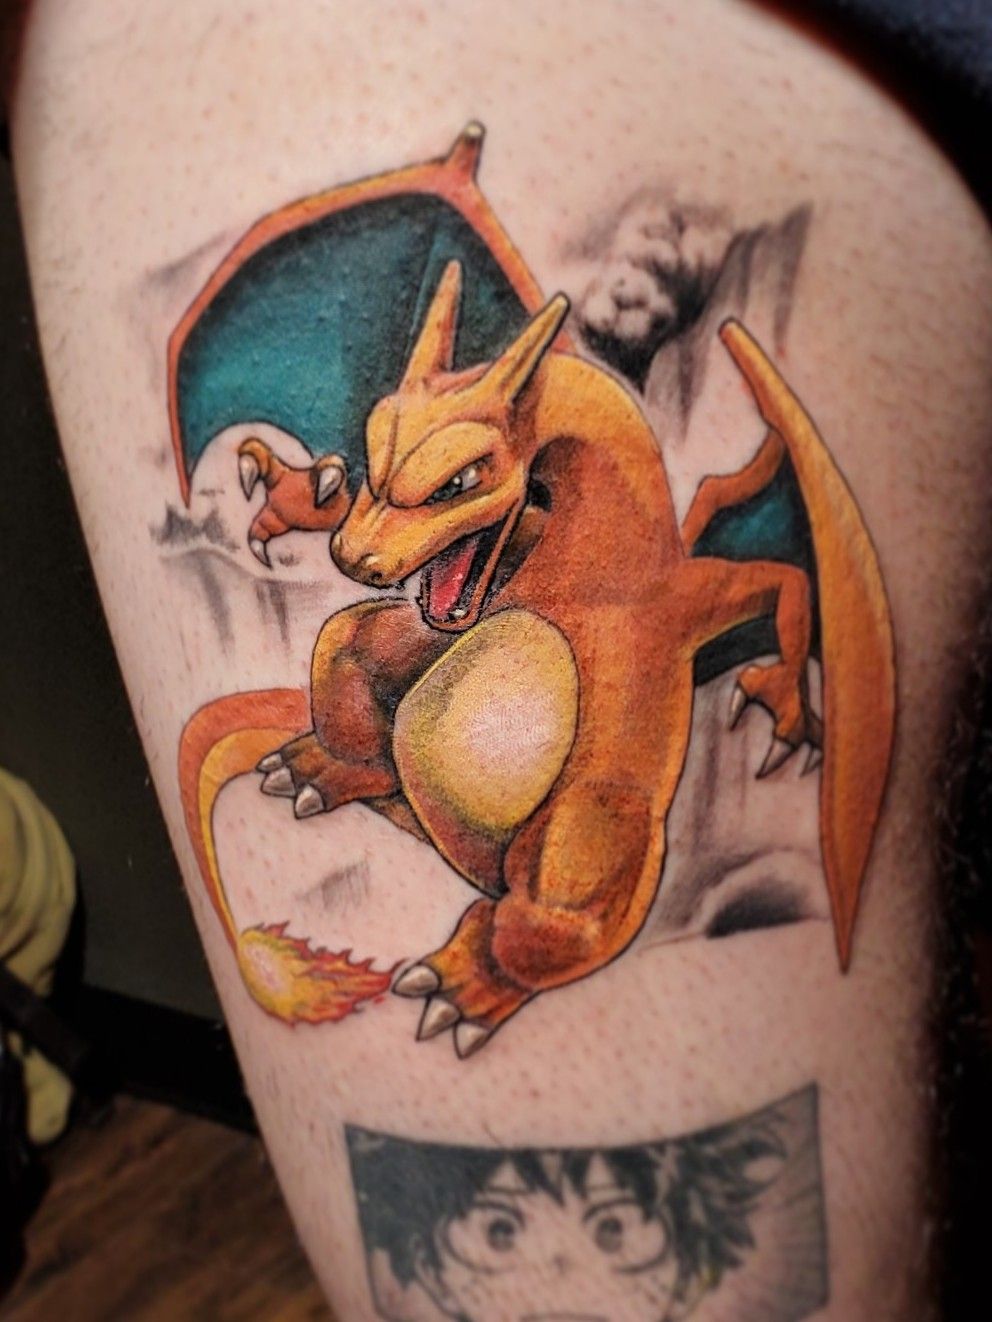 Jem Lou Tattoo on Twitter Finished up this shiny charizard to match shiny  gyrados Pokemon Charizard shinypokemon httpstcoze6uICYYVD   Twitter